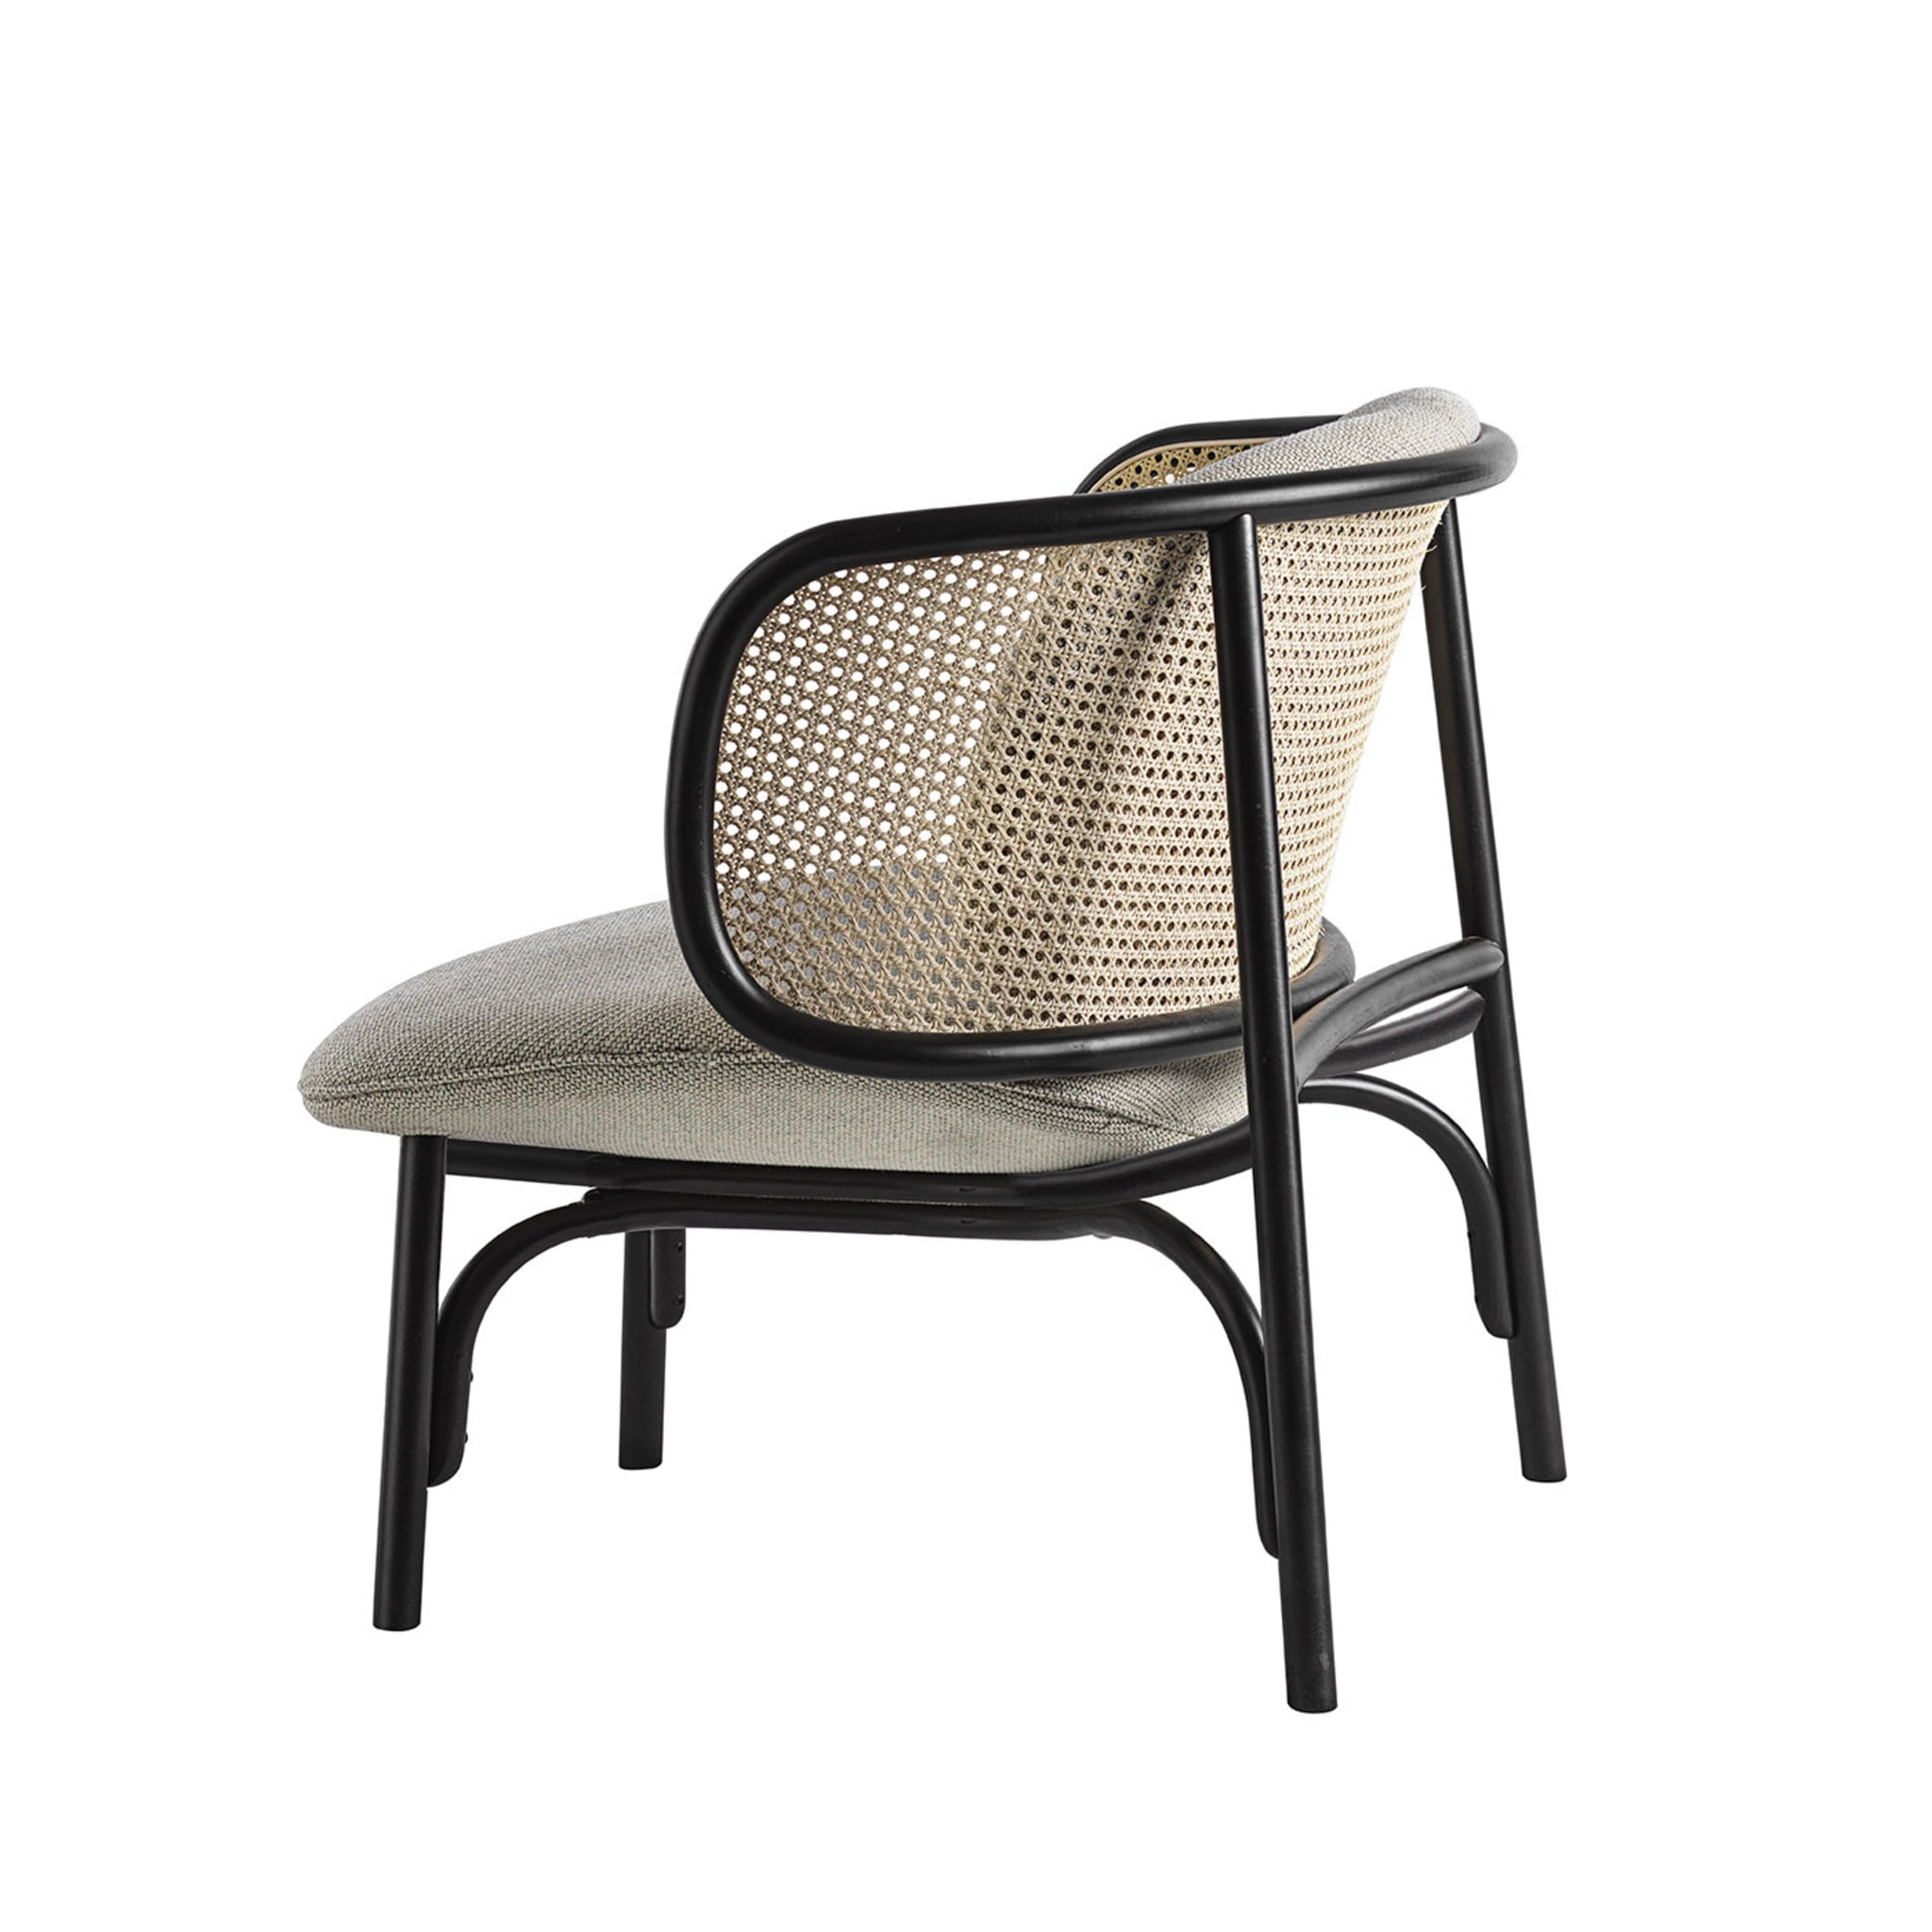 Suzenne Lounge Chair by Chiara Andreatti - Alternative view 1